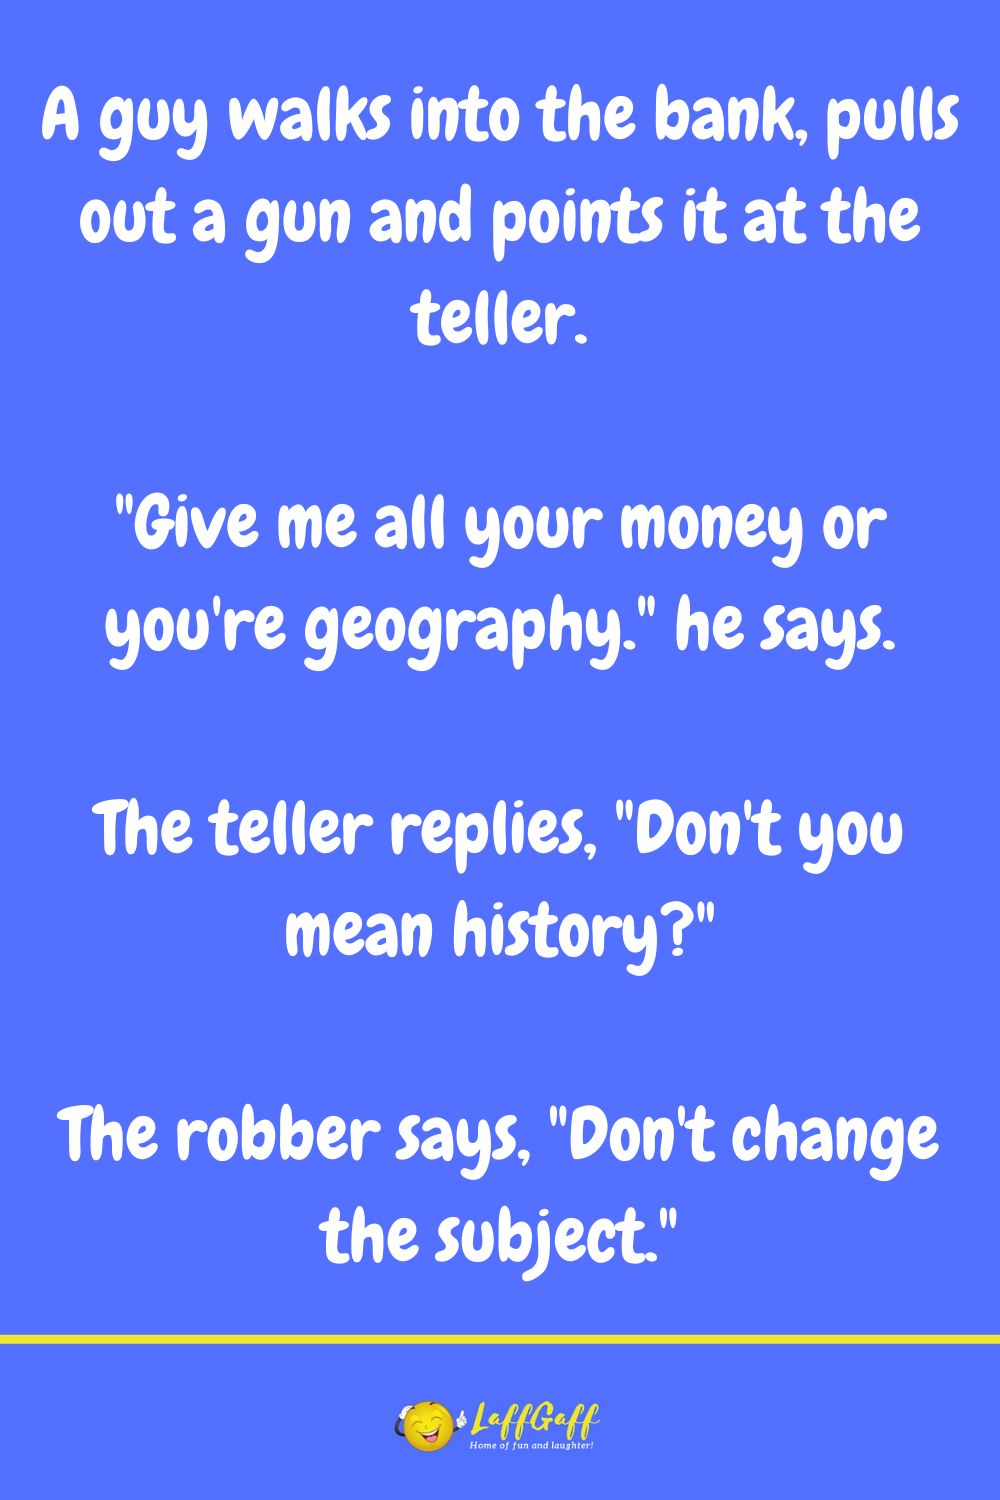 Bank robber joke from LaffGaff.